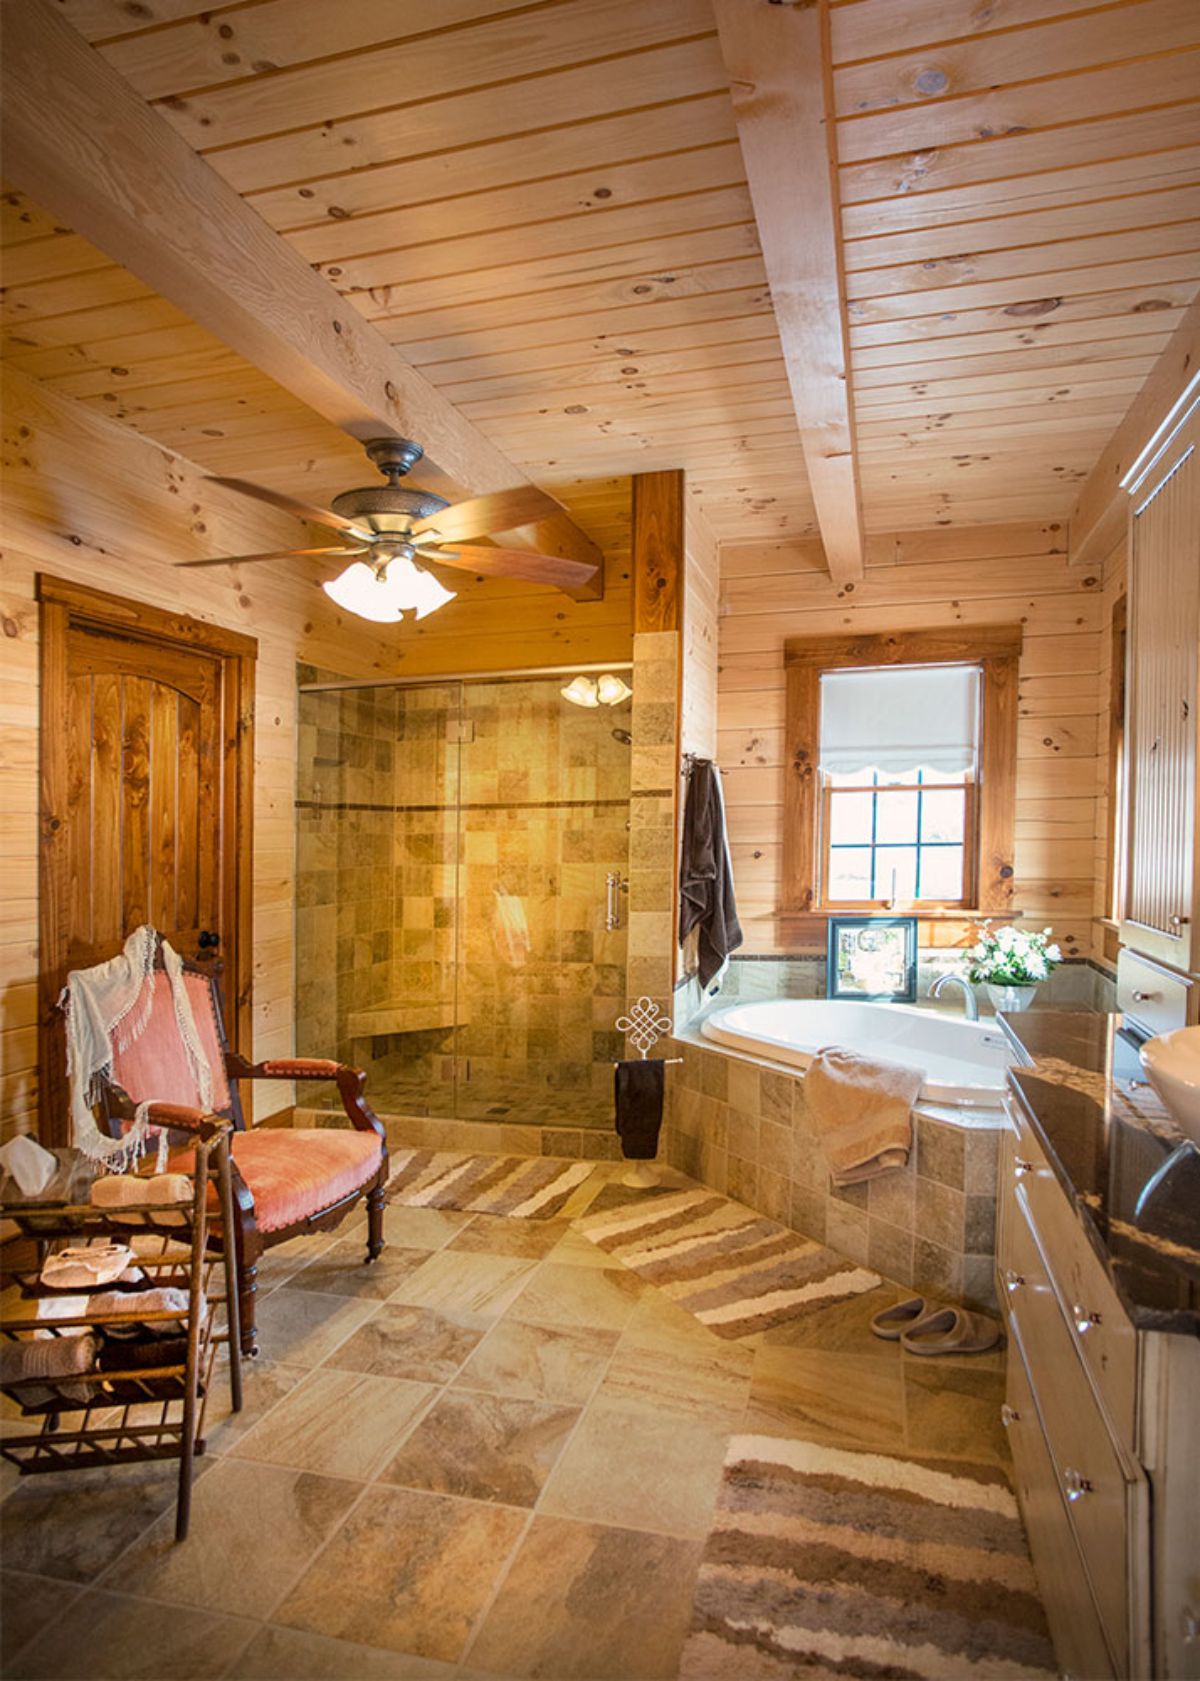 tiled shower next to soaking tub in log cabin bathroom